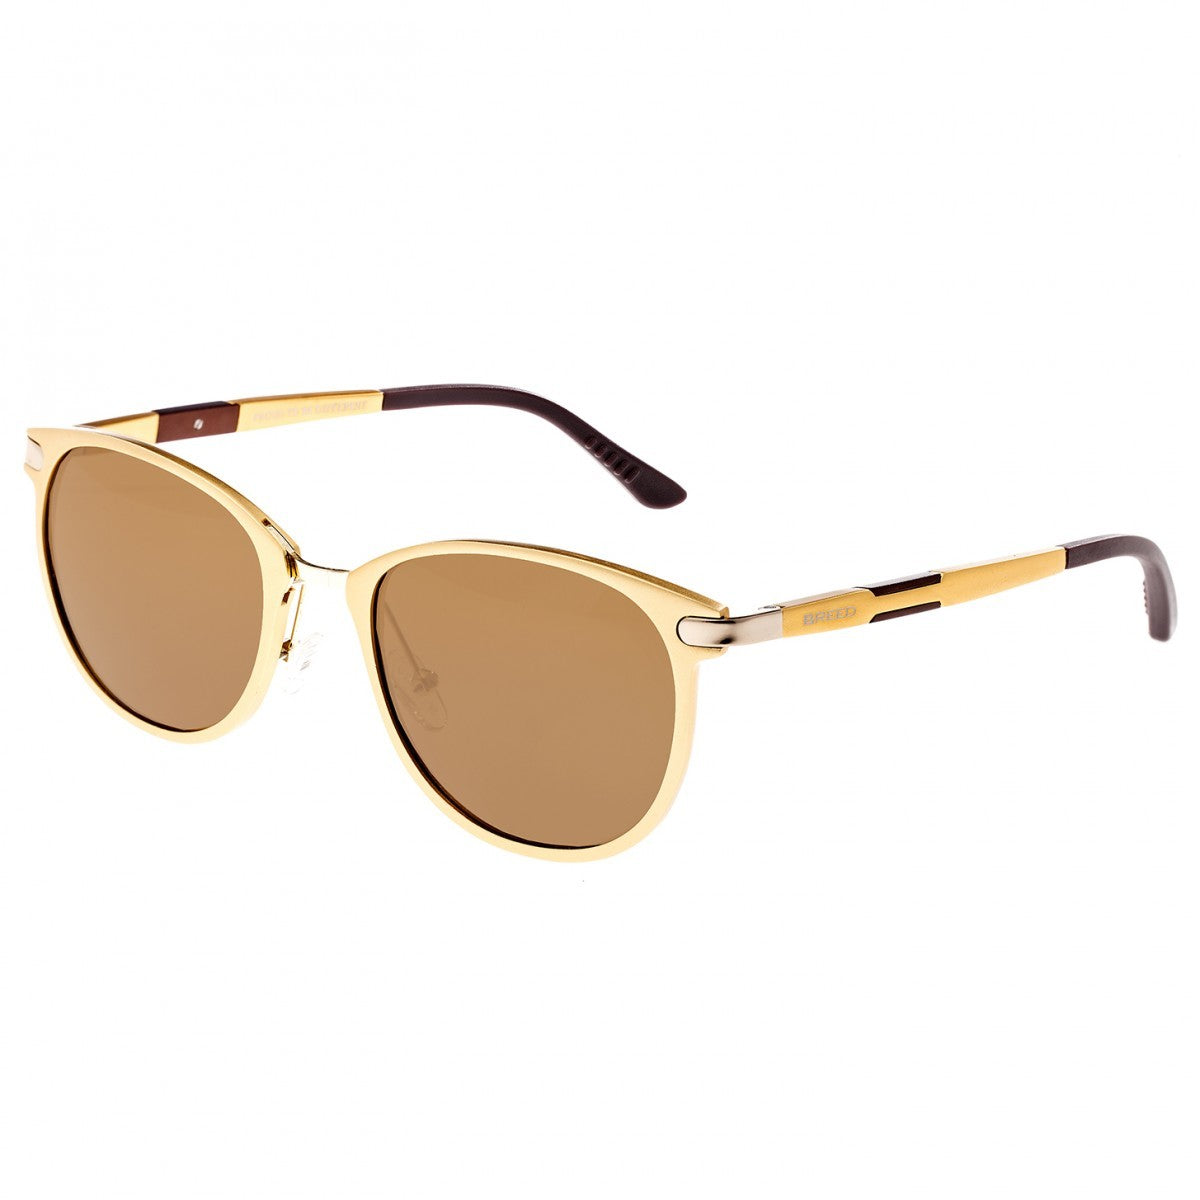 Breed Orion Aluminium Polarized Sunglasses - Gold/Brown - BSG020GD